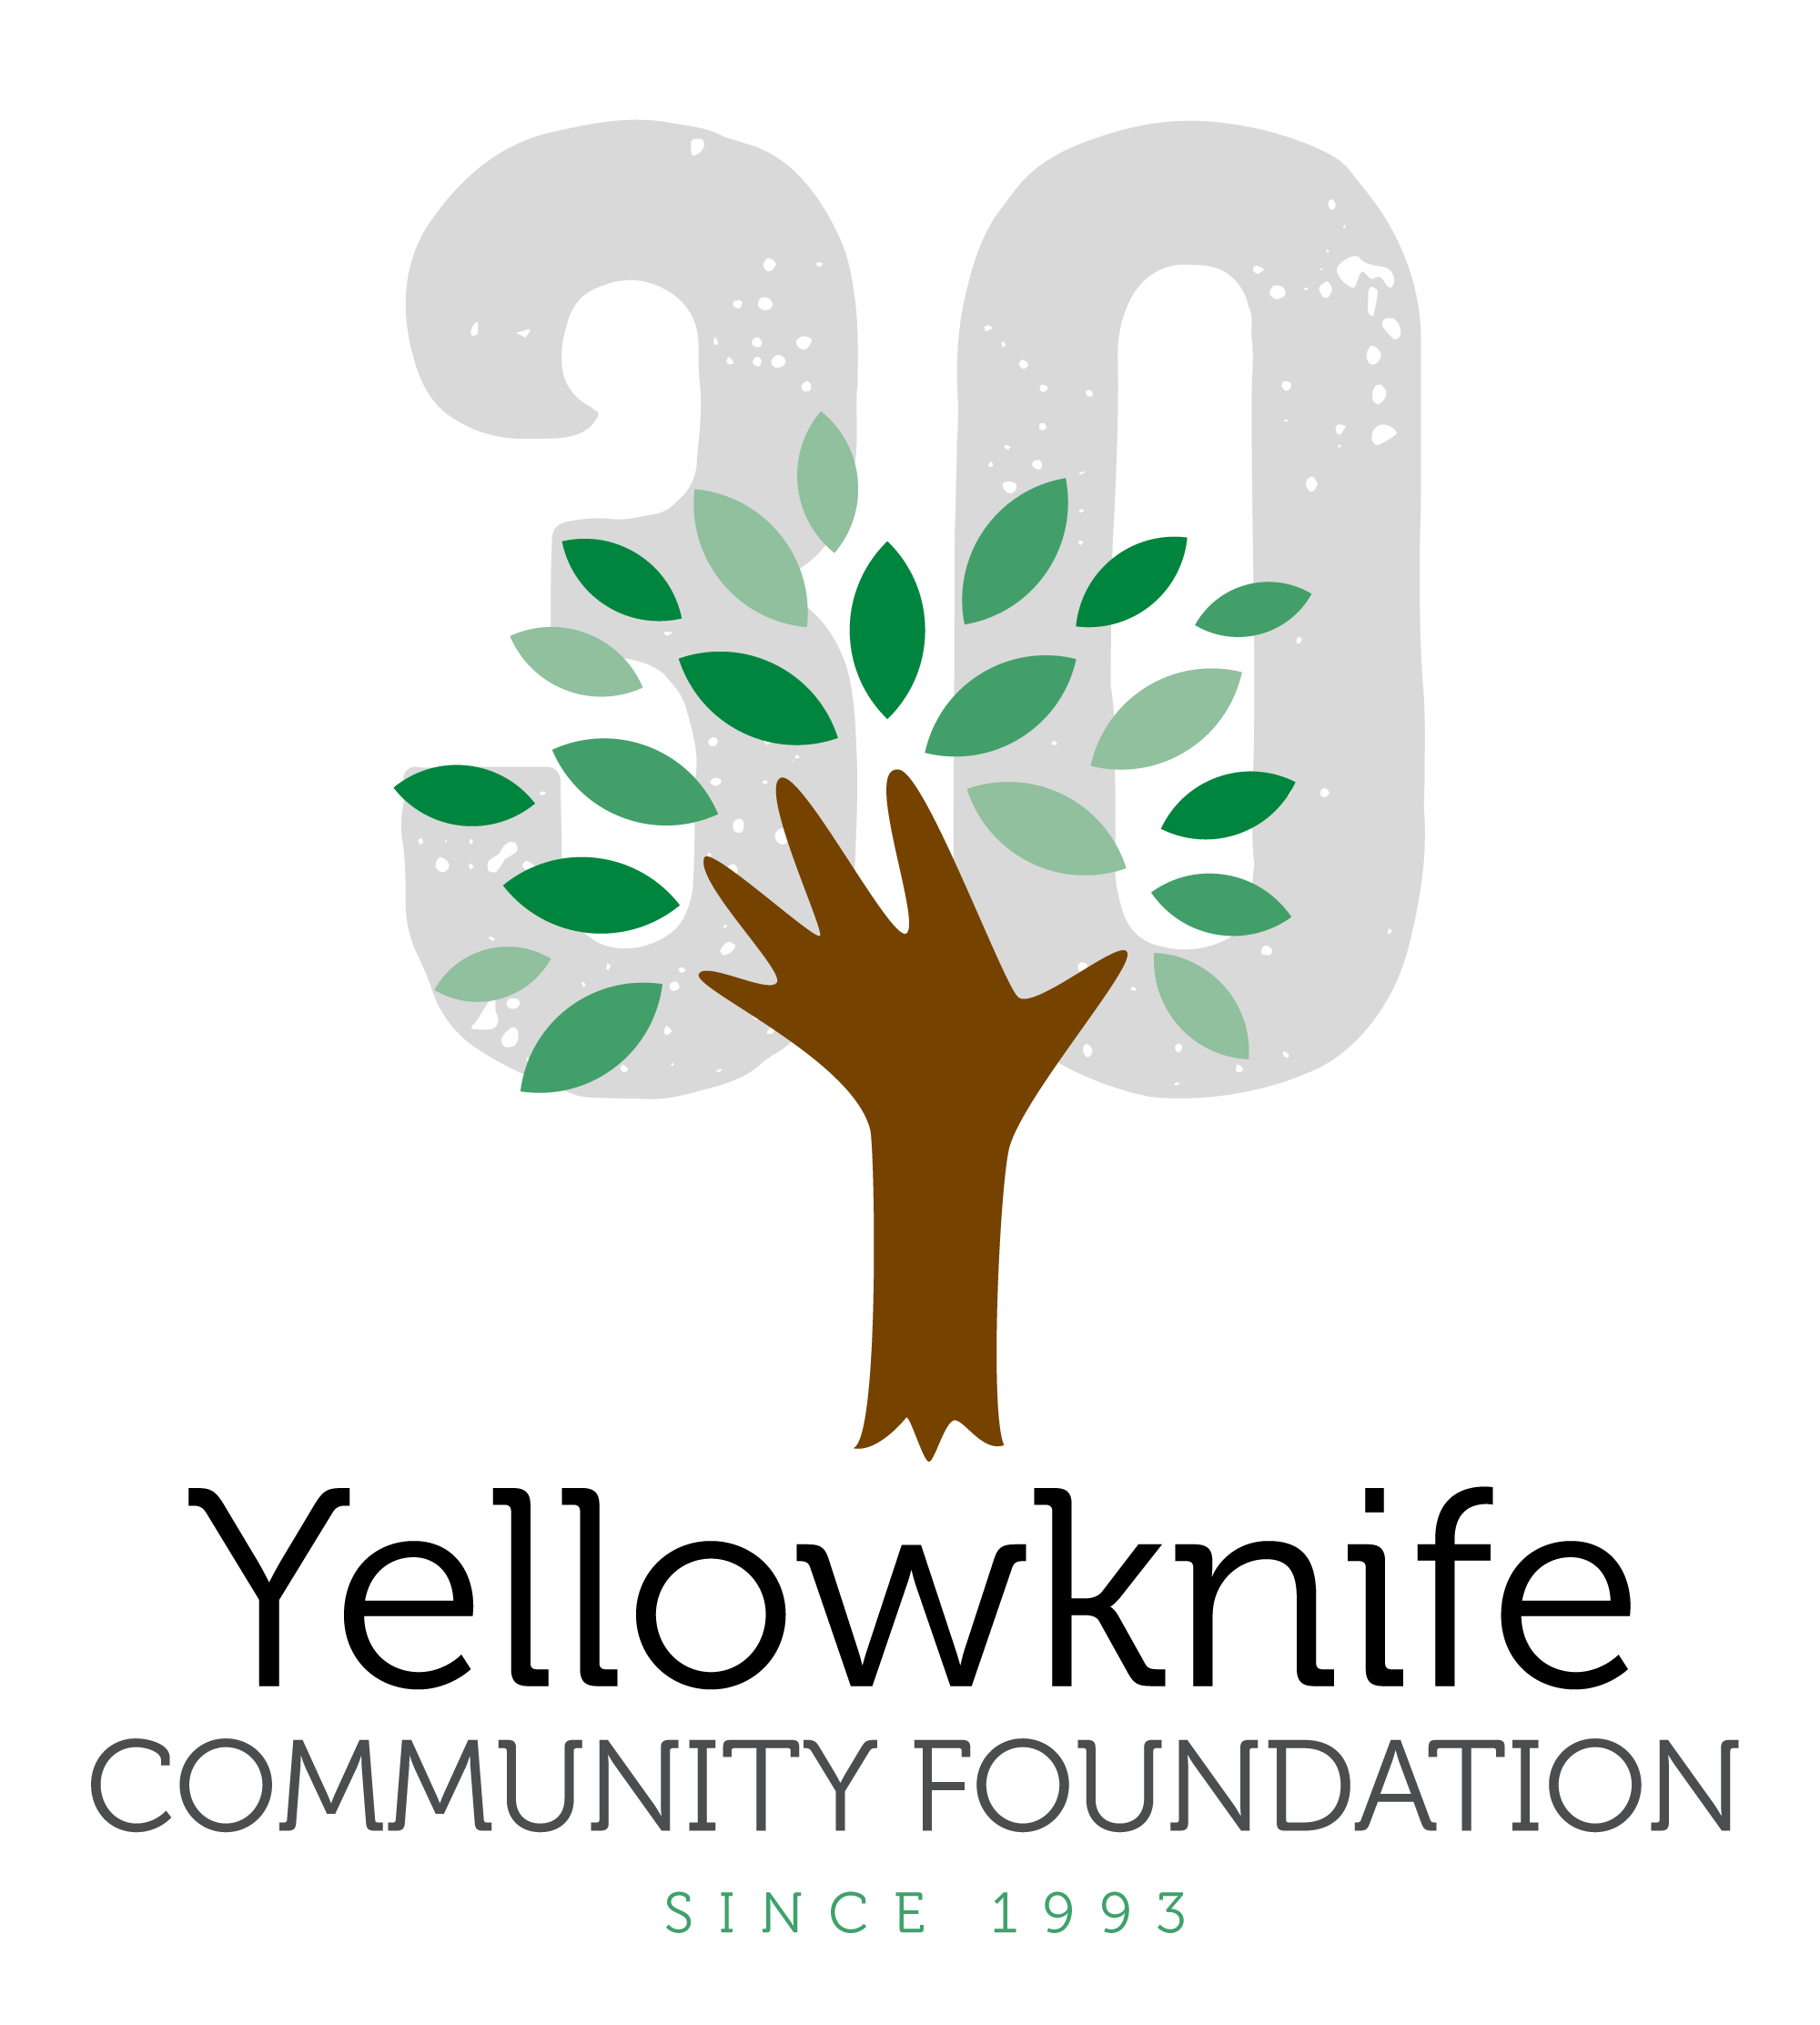 Yellowknife Community Foundation | Celebrating 30 Years (1993 - 2023)